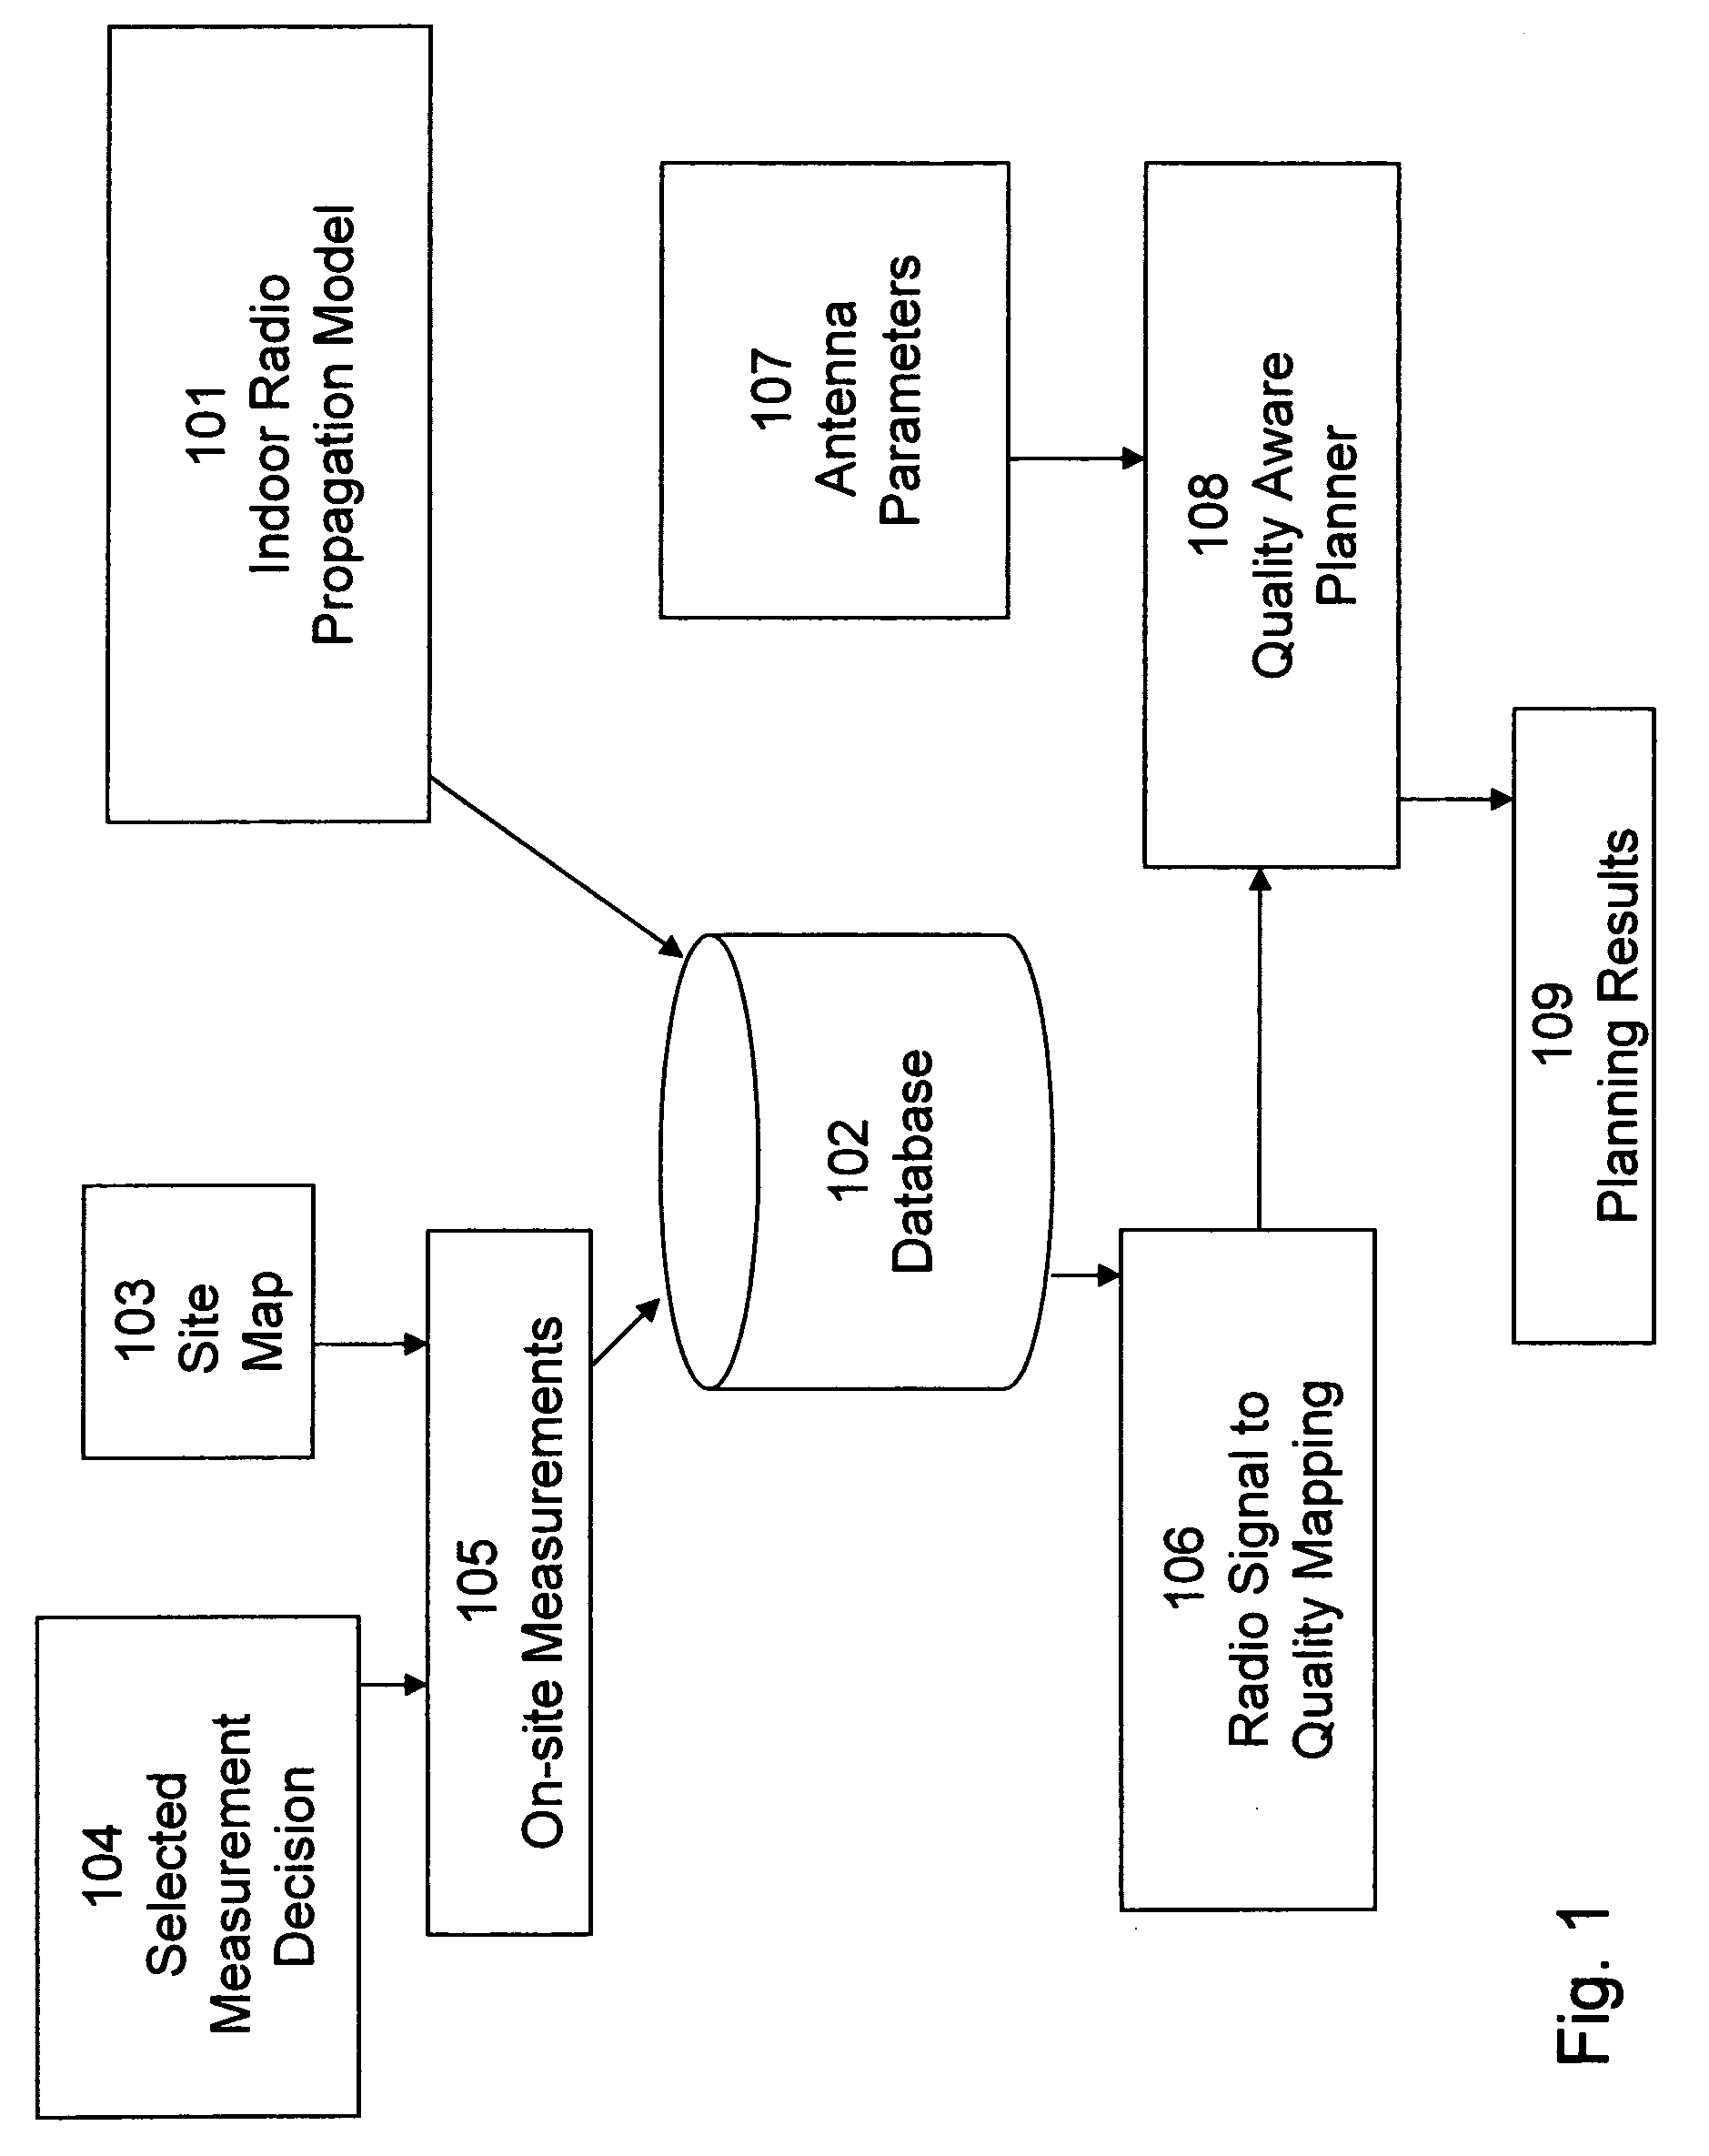 Method of indoor radio planning